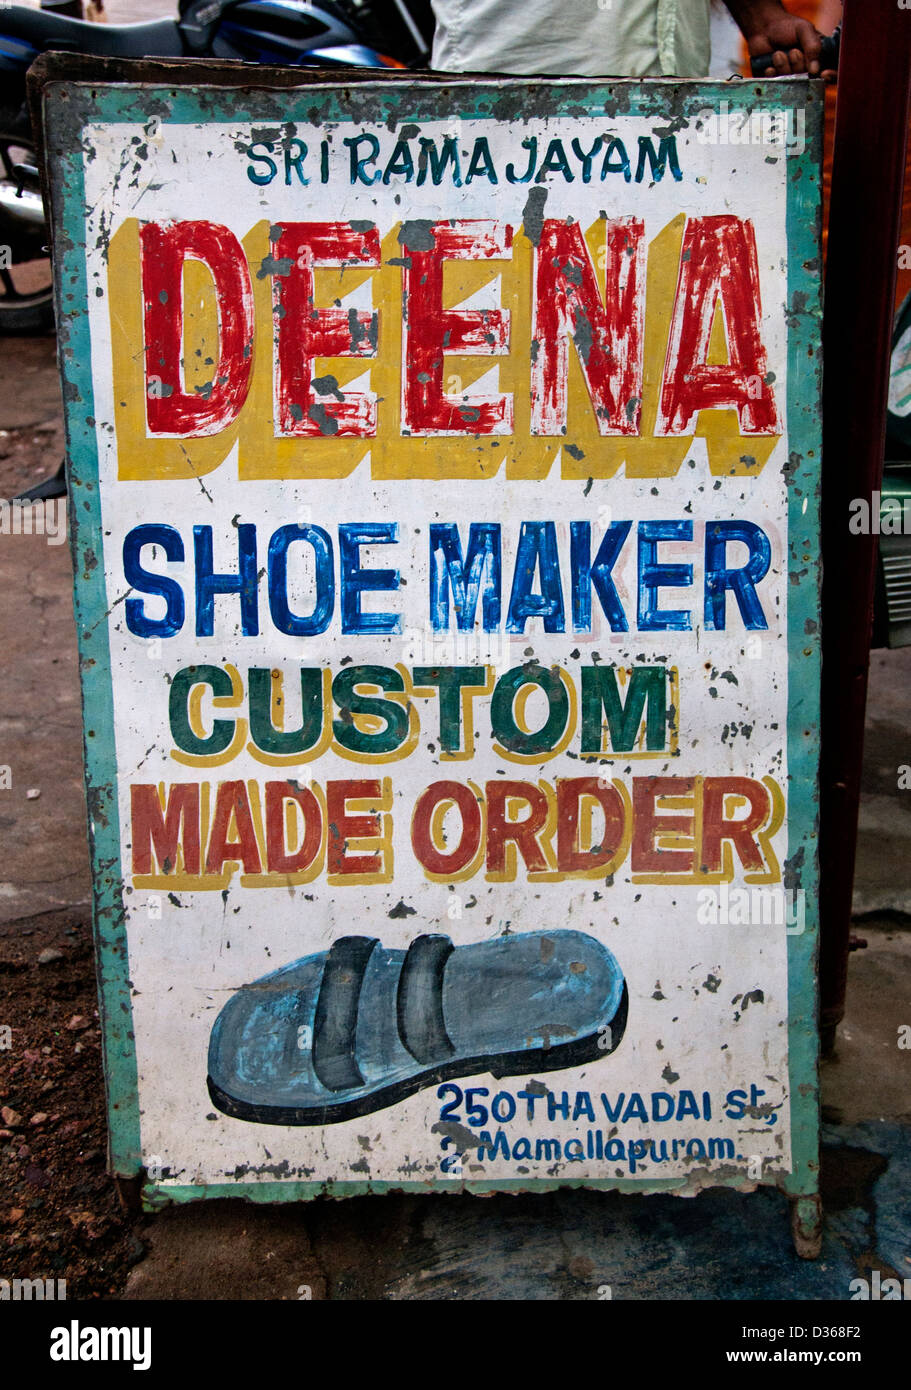 Deena Shoemaker custom made orden Kovalam Cobelon Covelong ( o ) de Tamil Nadu, India Foto de stock